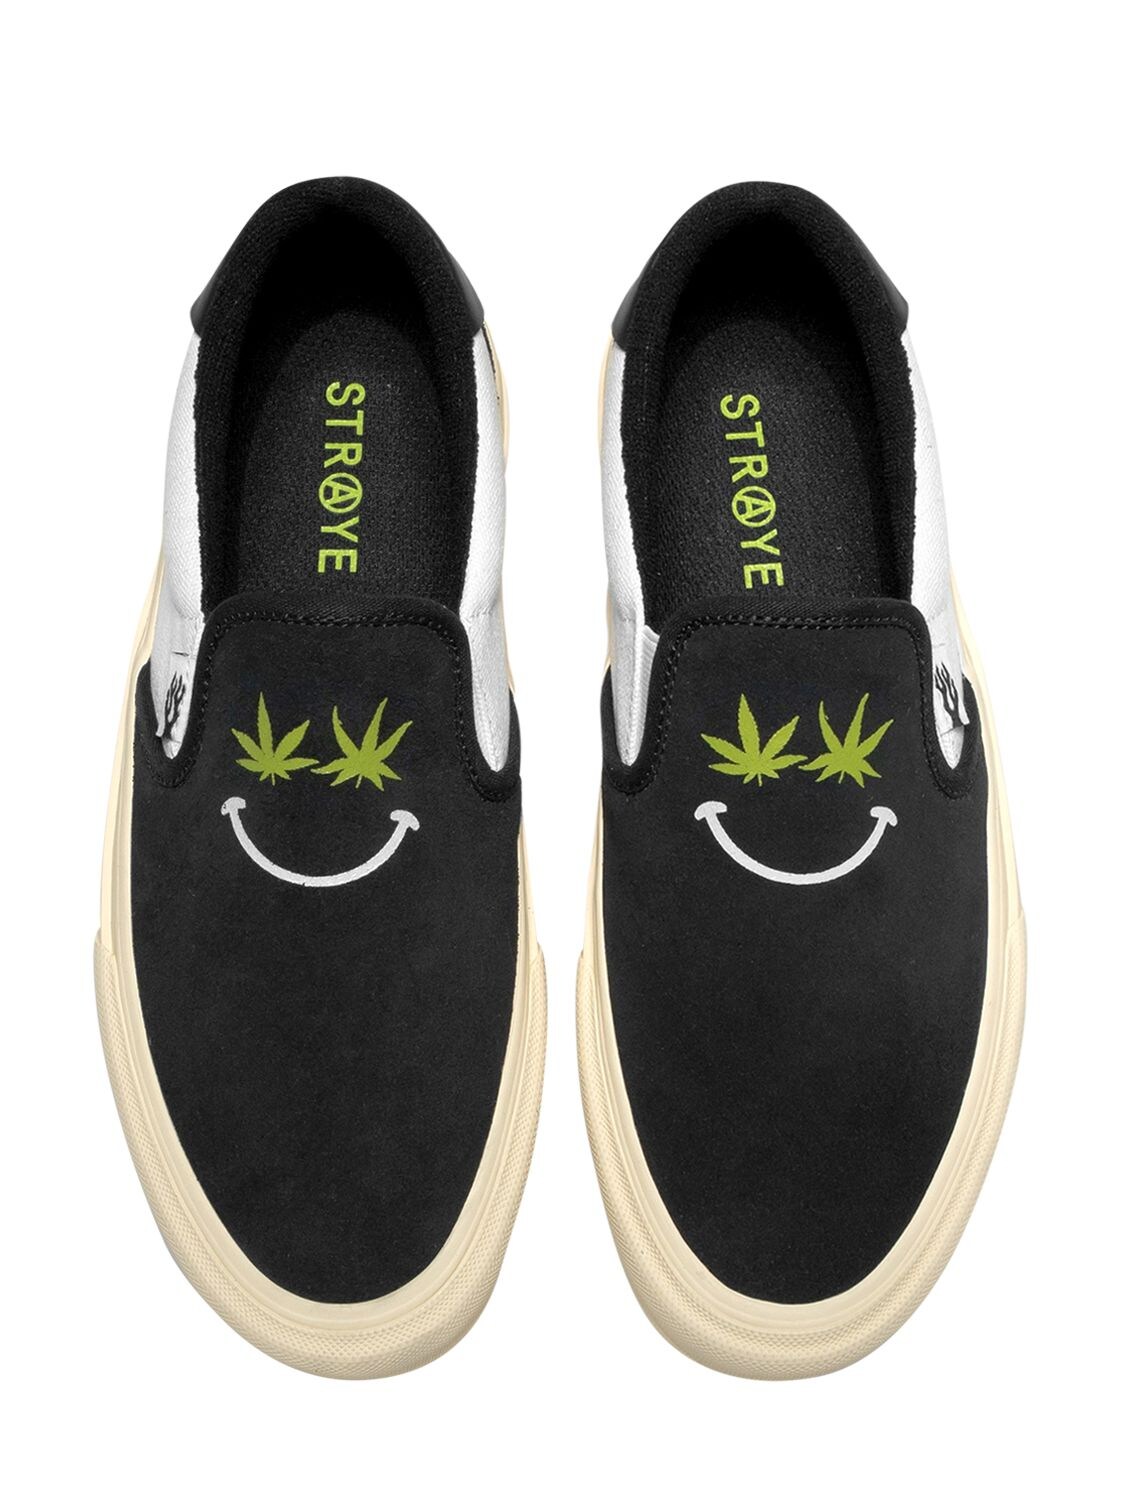 Ventura Weed Belong Suede Sneakers